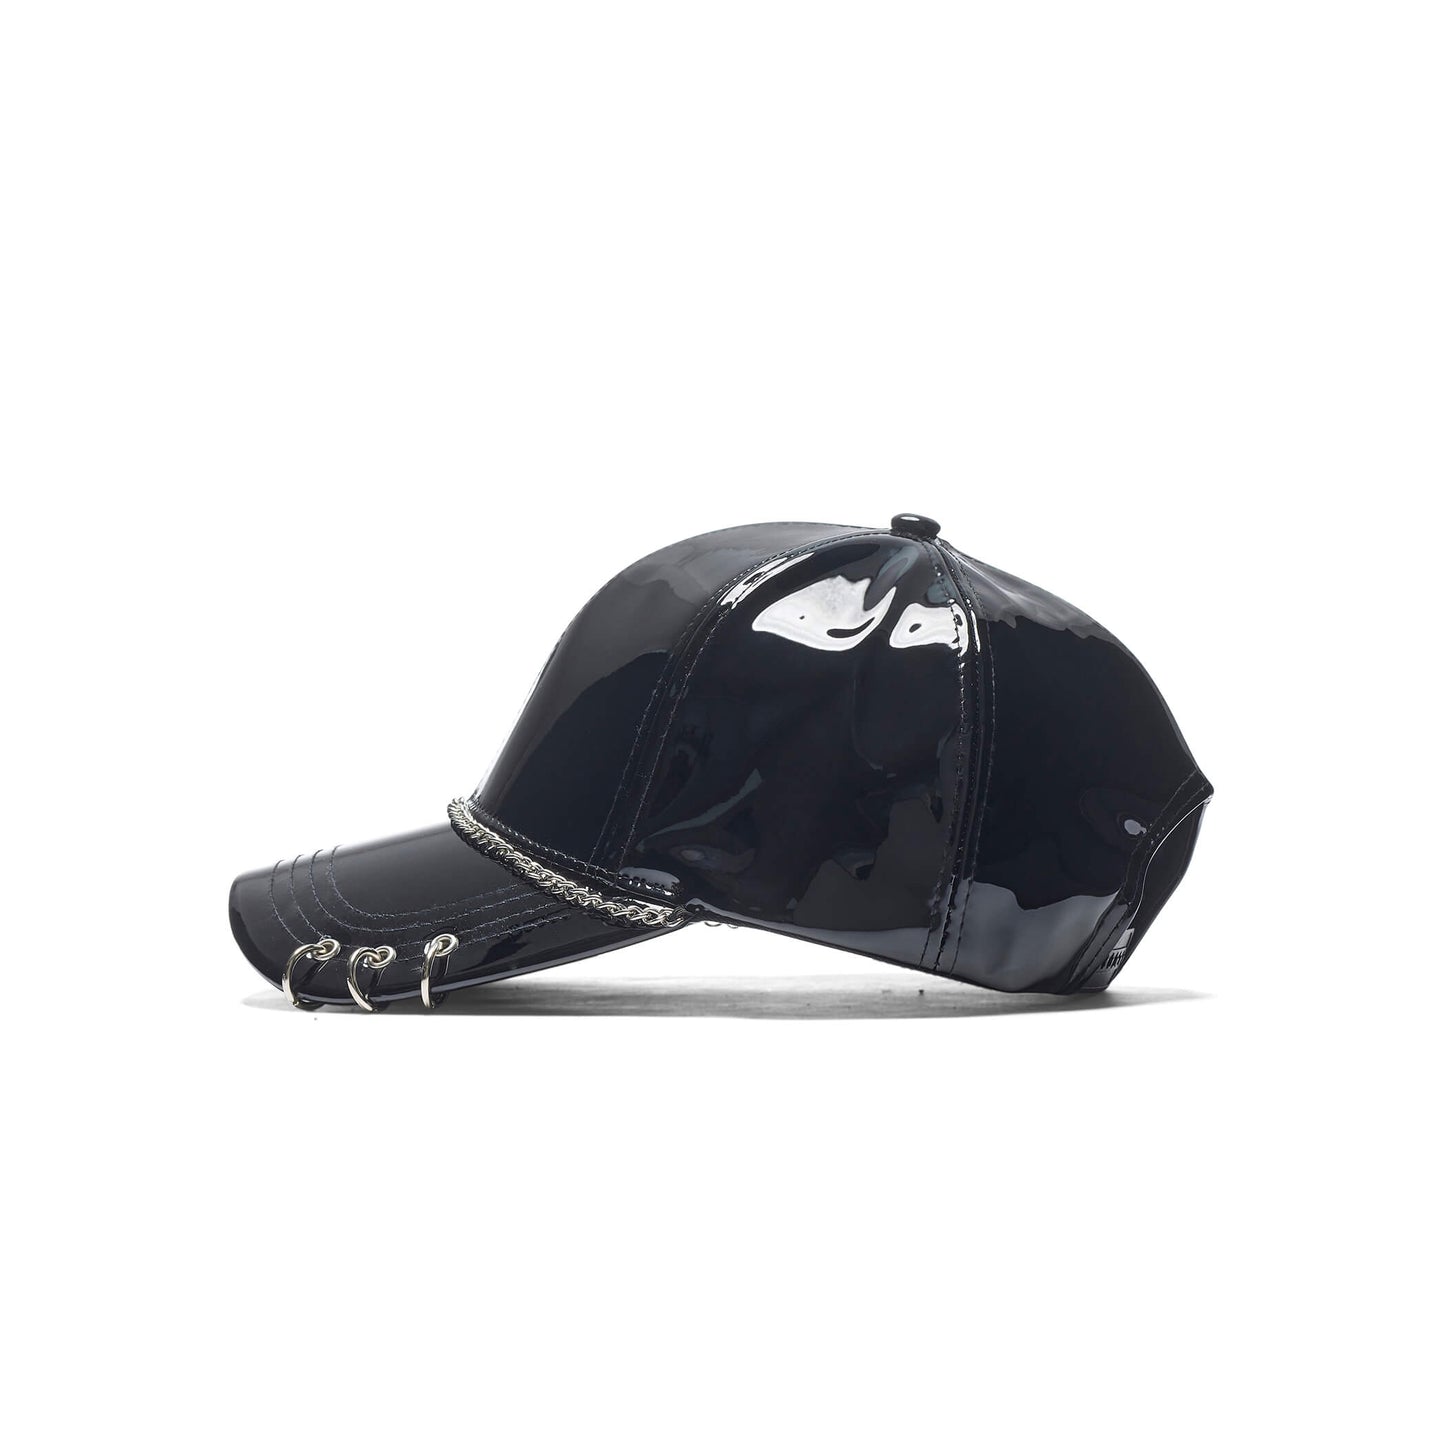 Malevolent Black Punk Cap - Accessories - KOI Footwear - Black - Side View